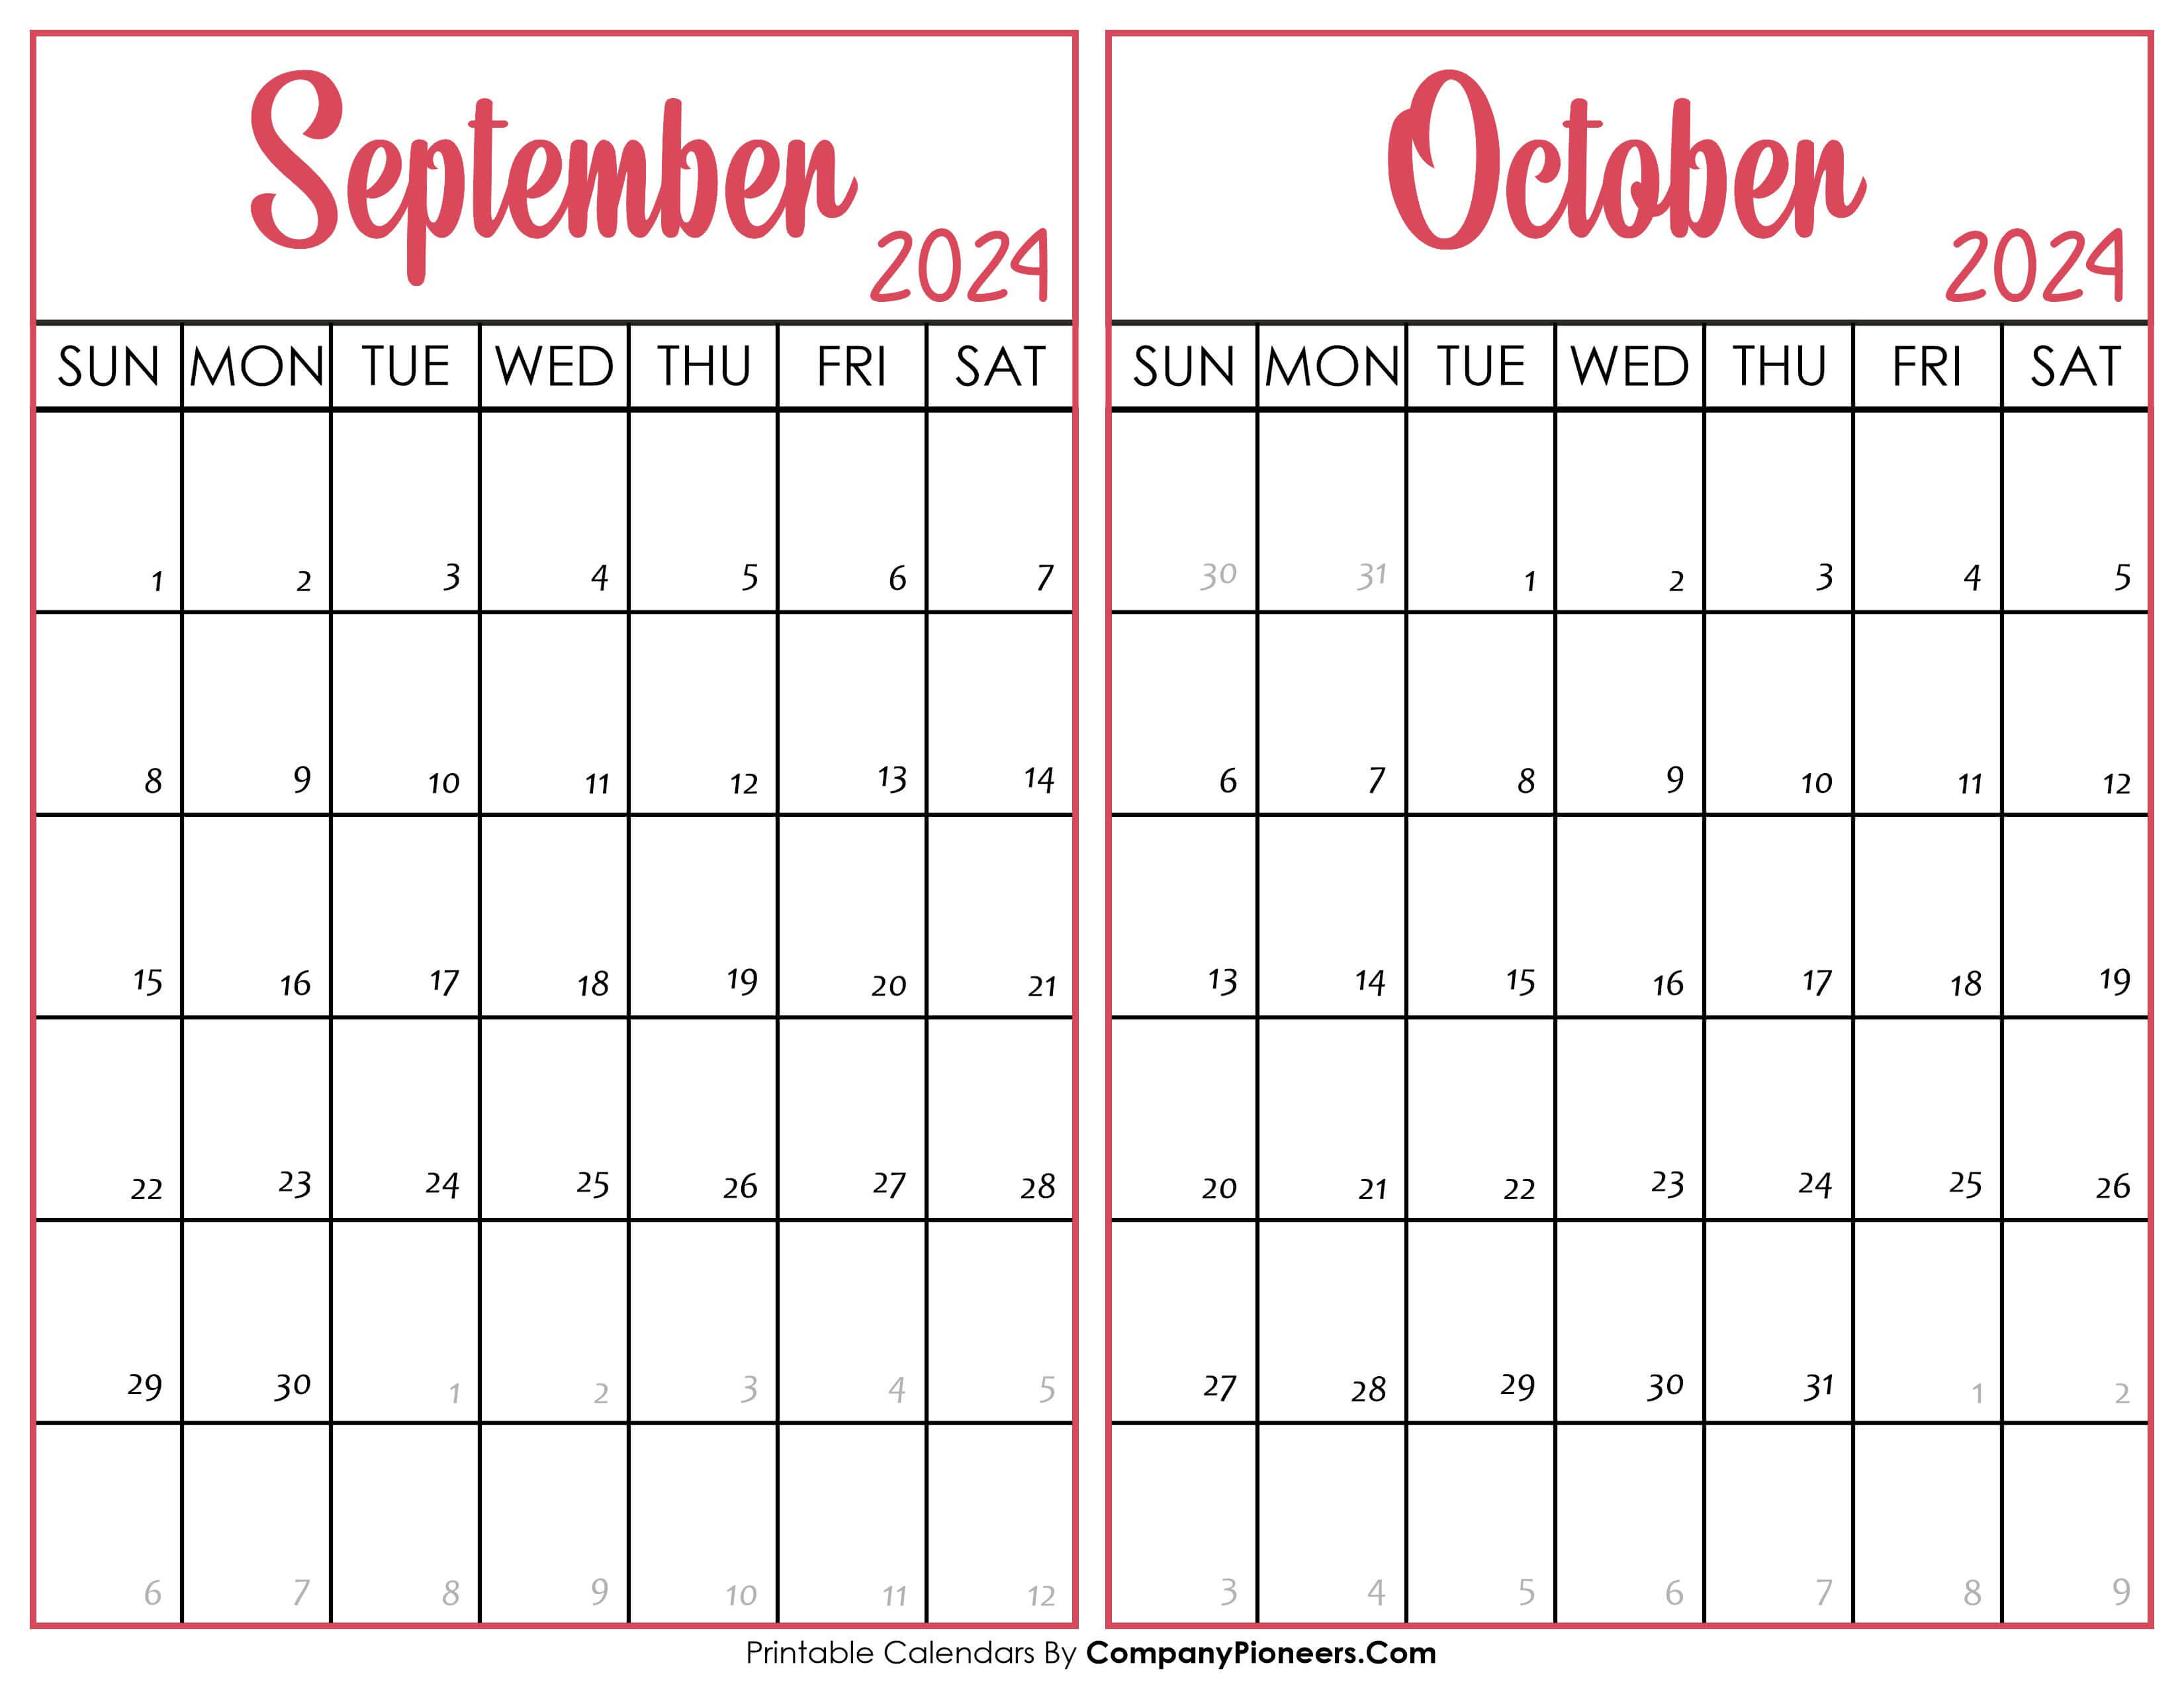 September and October Calendar 2024